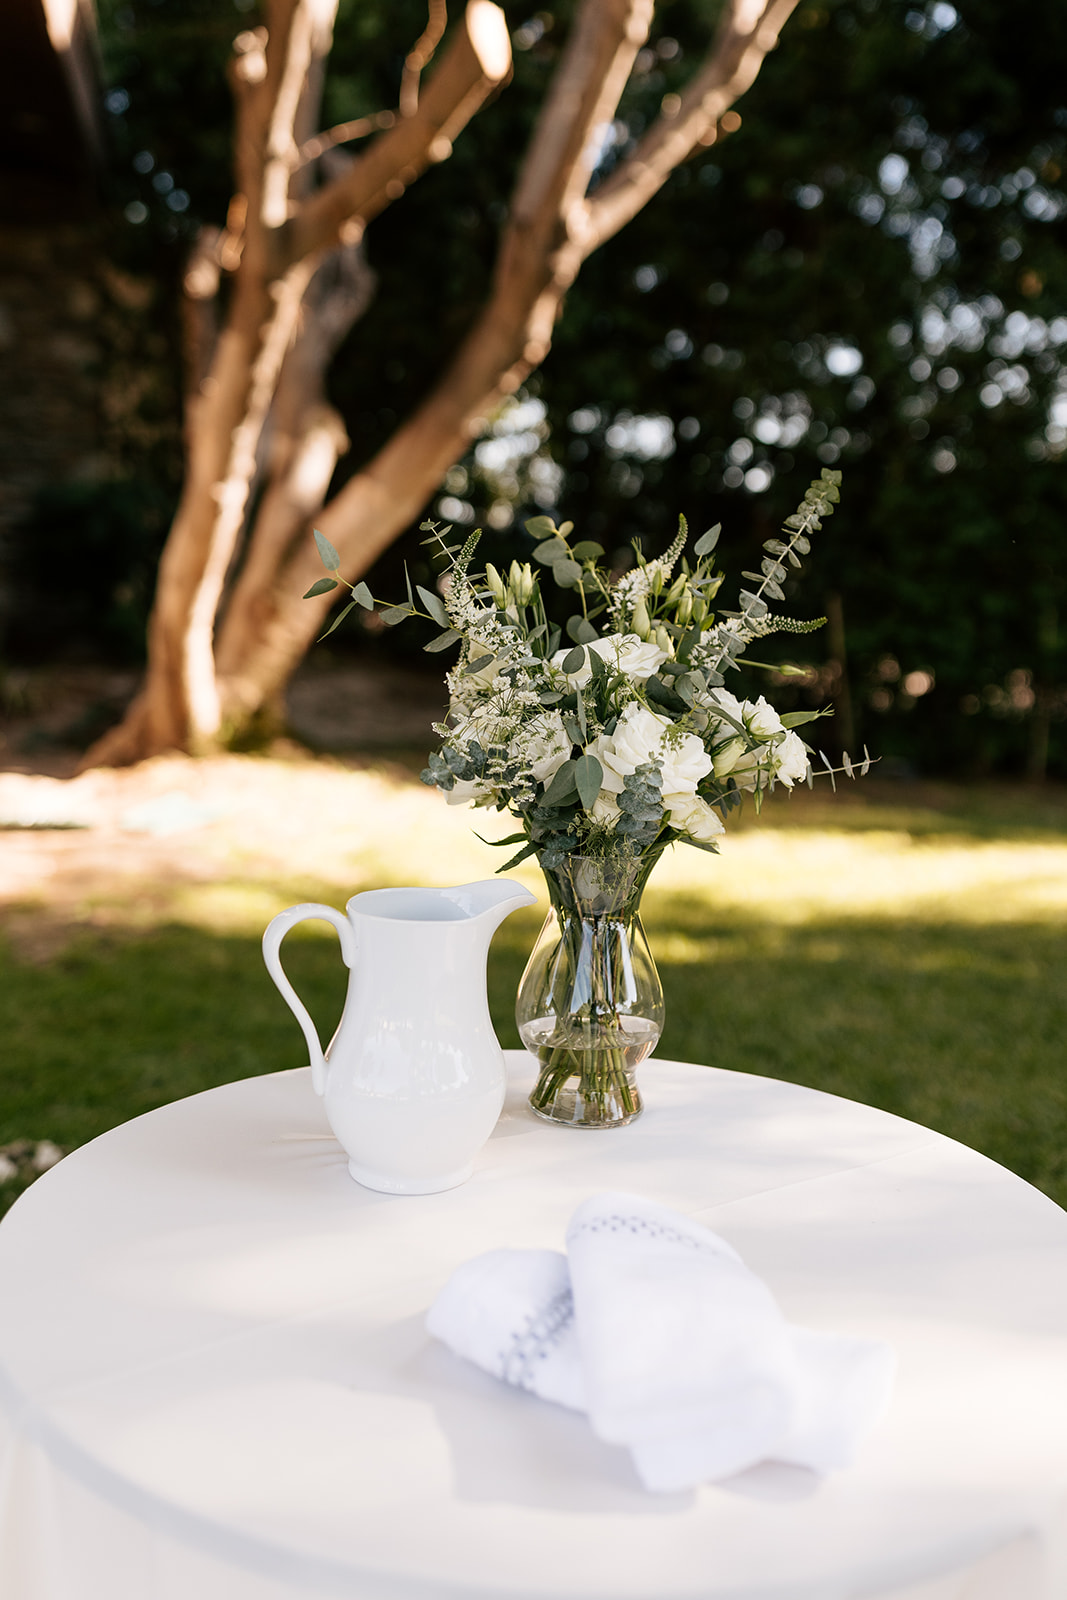 griffith house wedding anaheim california green and white wedding flowers florals white wedding heels outdoor ceremony